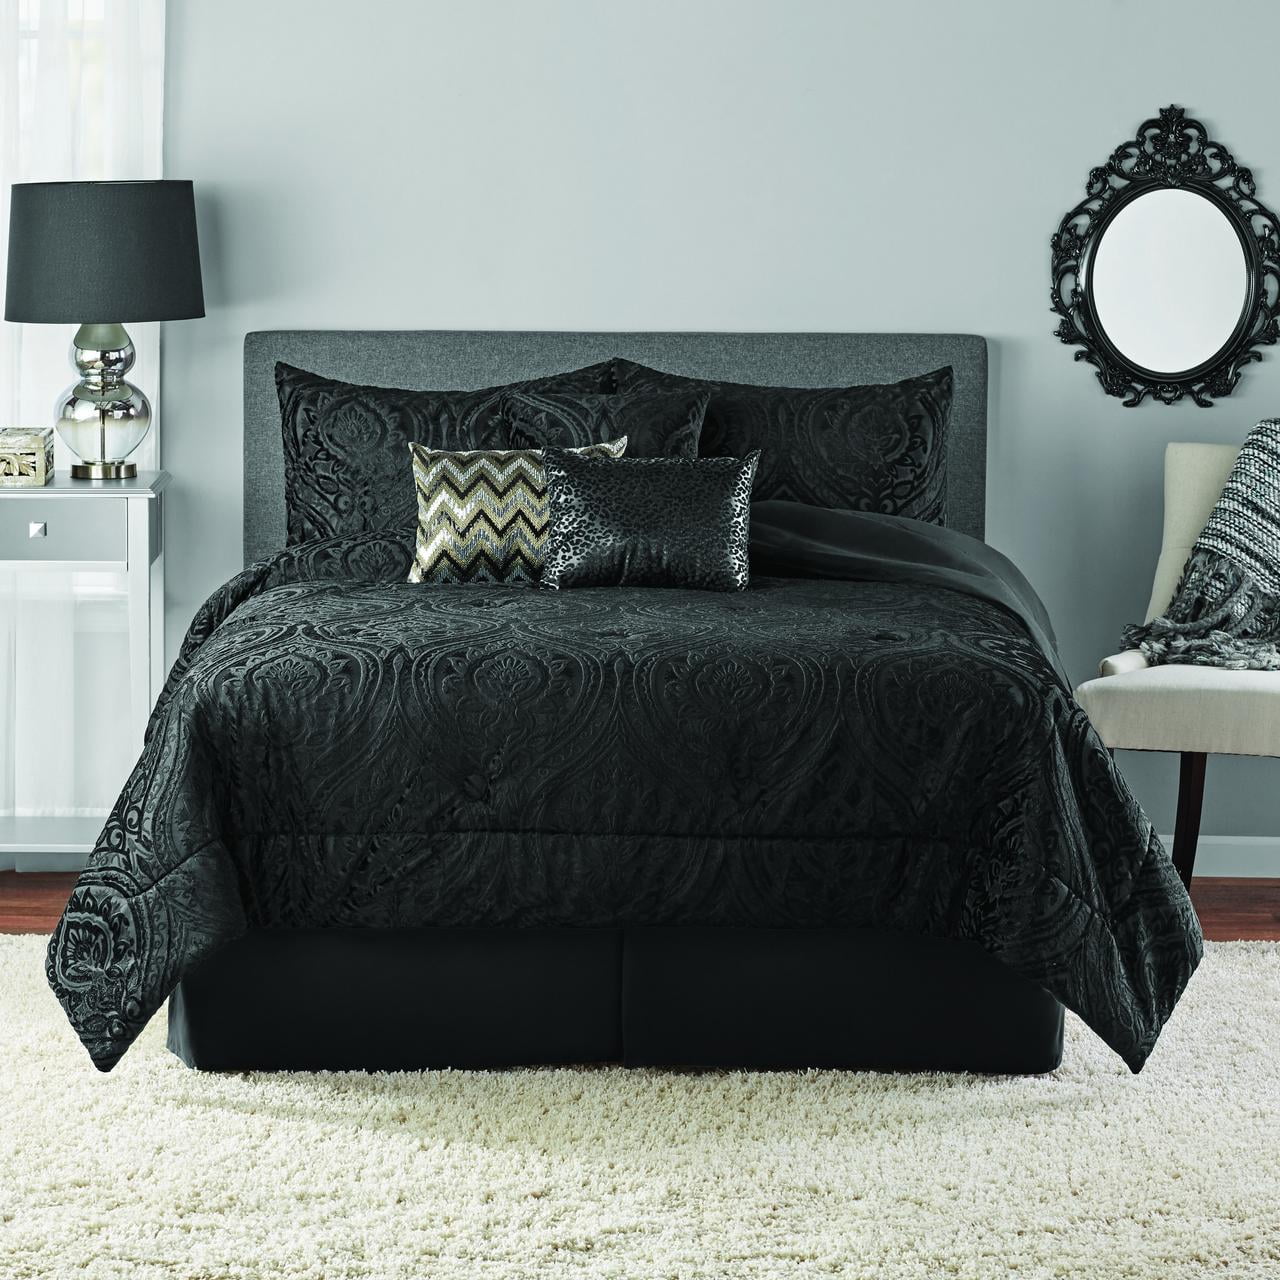 Velvet Comforter Set Full/Queen Size 3 Piece Silver Gray Soft Plush Luxury Beddi 